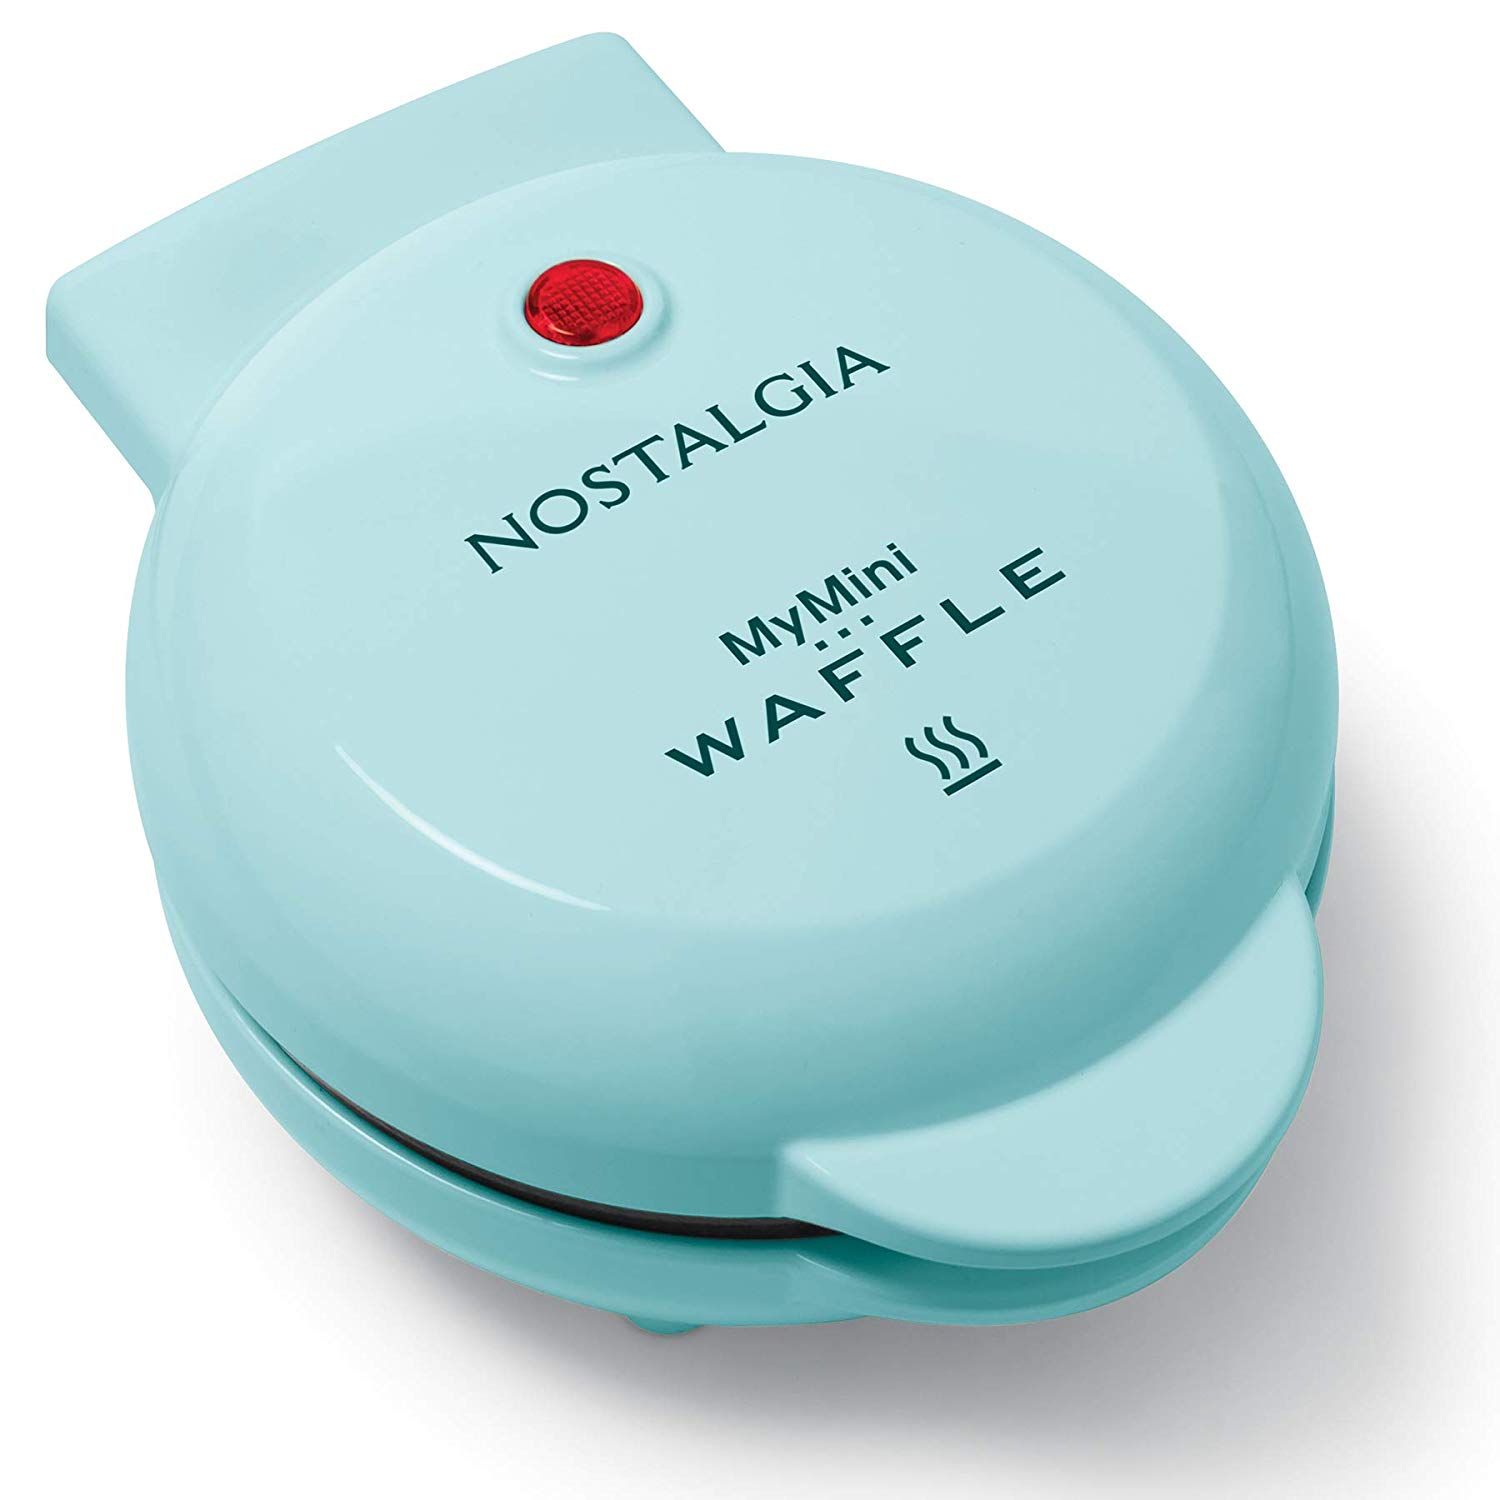 https://www.dontwasteyourmoney.com/wp-content/uploads/2020/01/nostalgia-mini-electric-waffle-maker-mini-waffle-maker.jpg